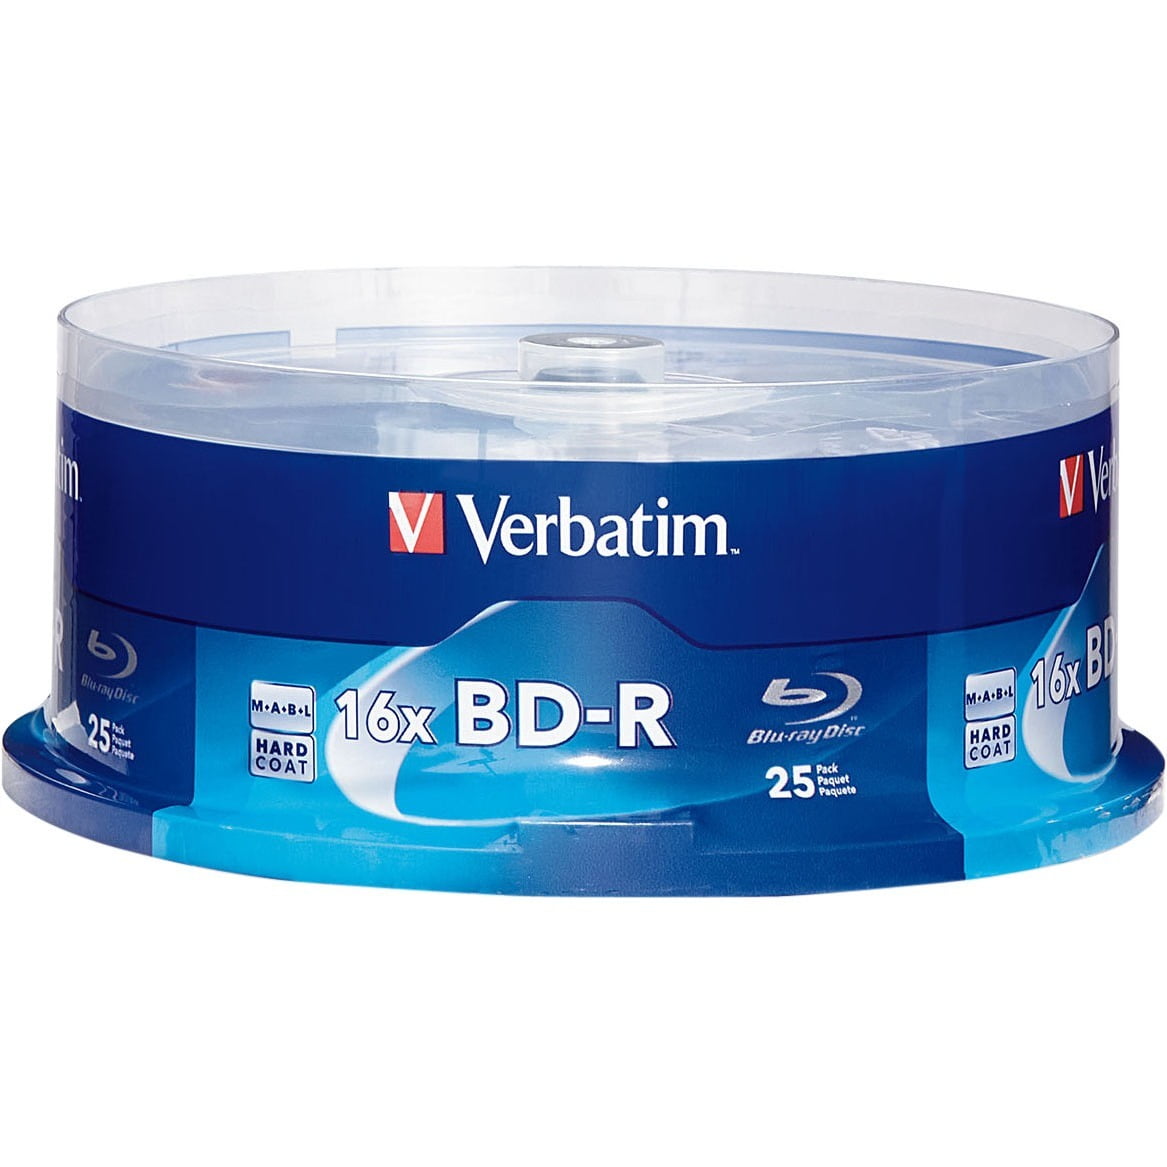 Verbatim Ver R 25gb 16x With Branded Surface 25pk Spindle 25 Walmart Com Walmart Com